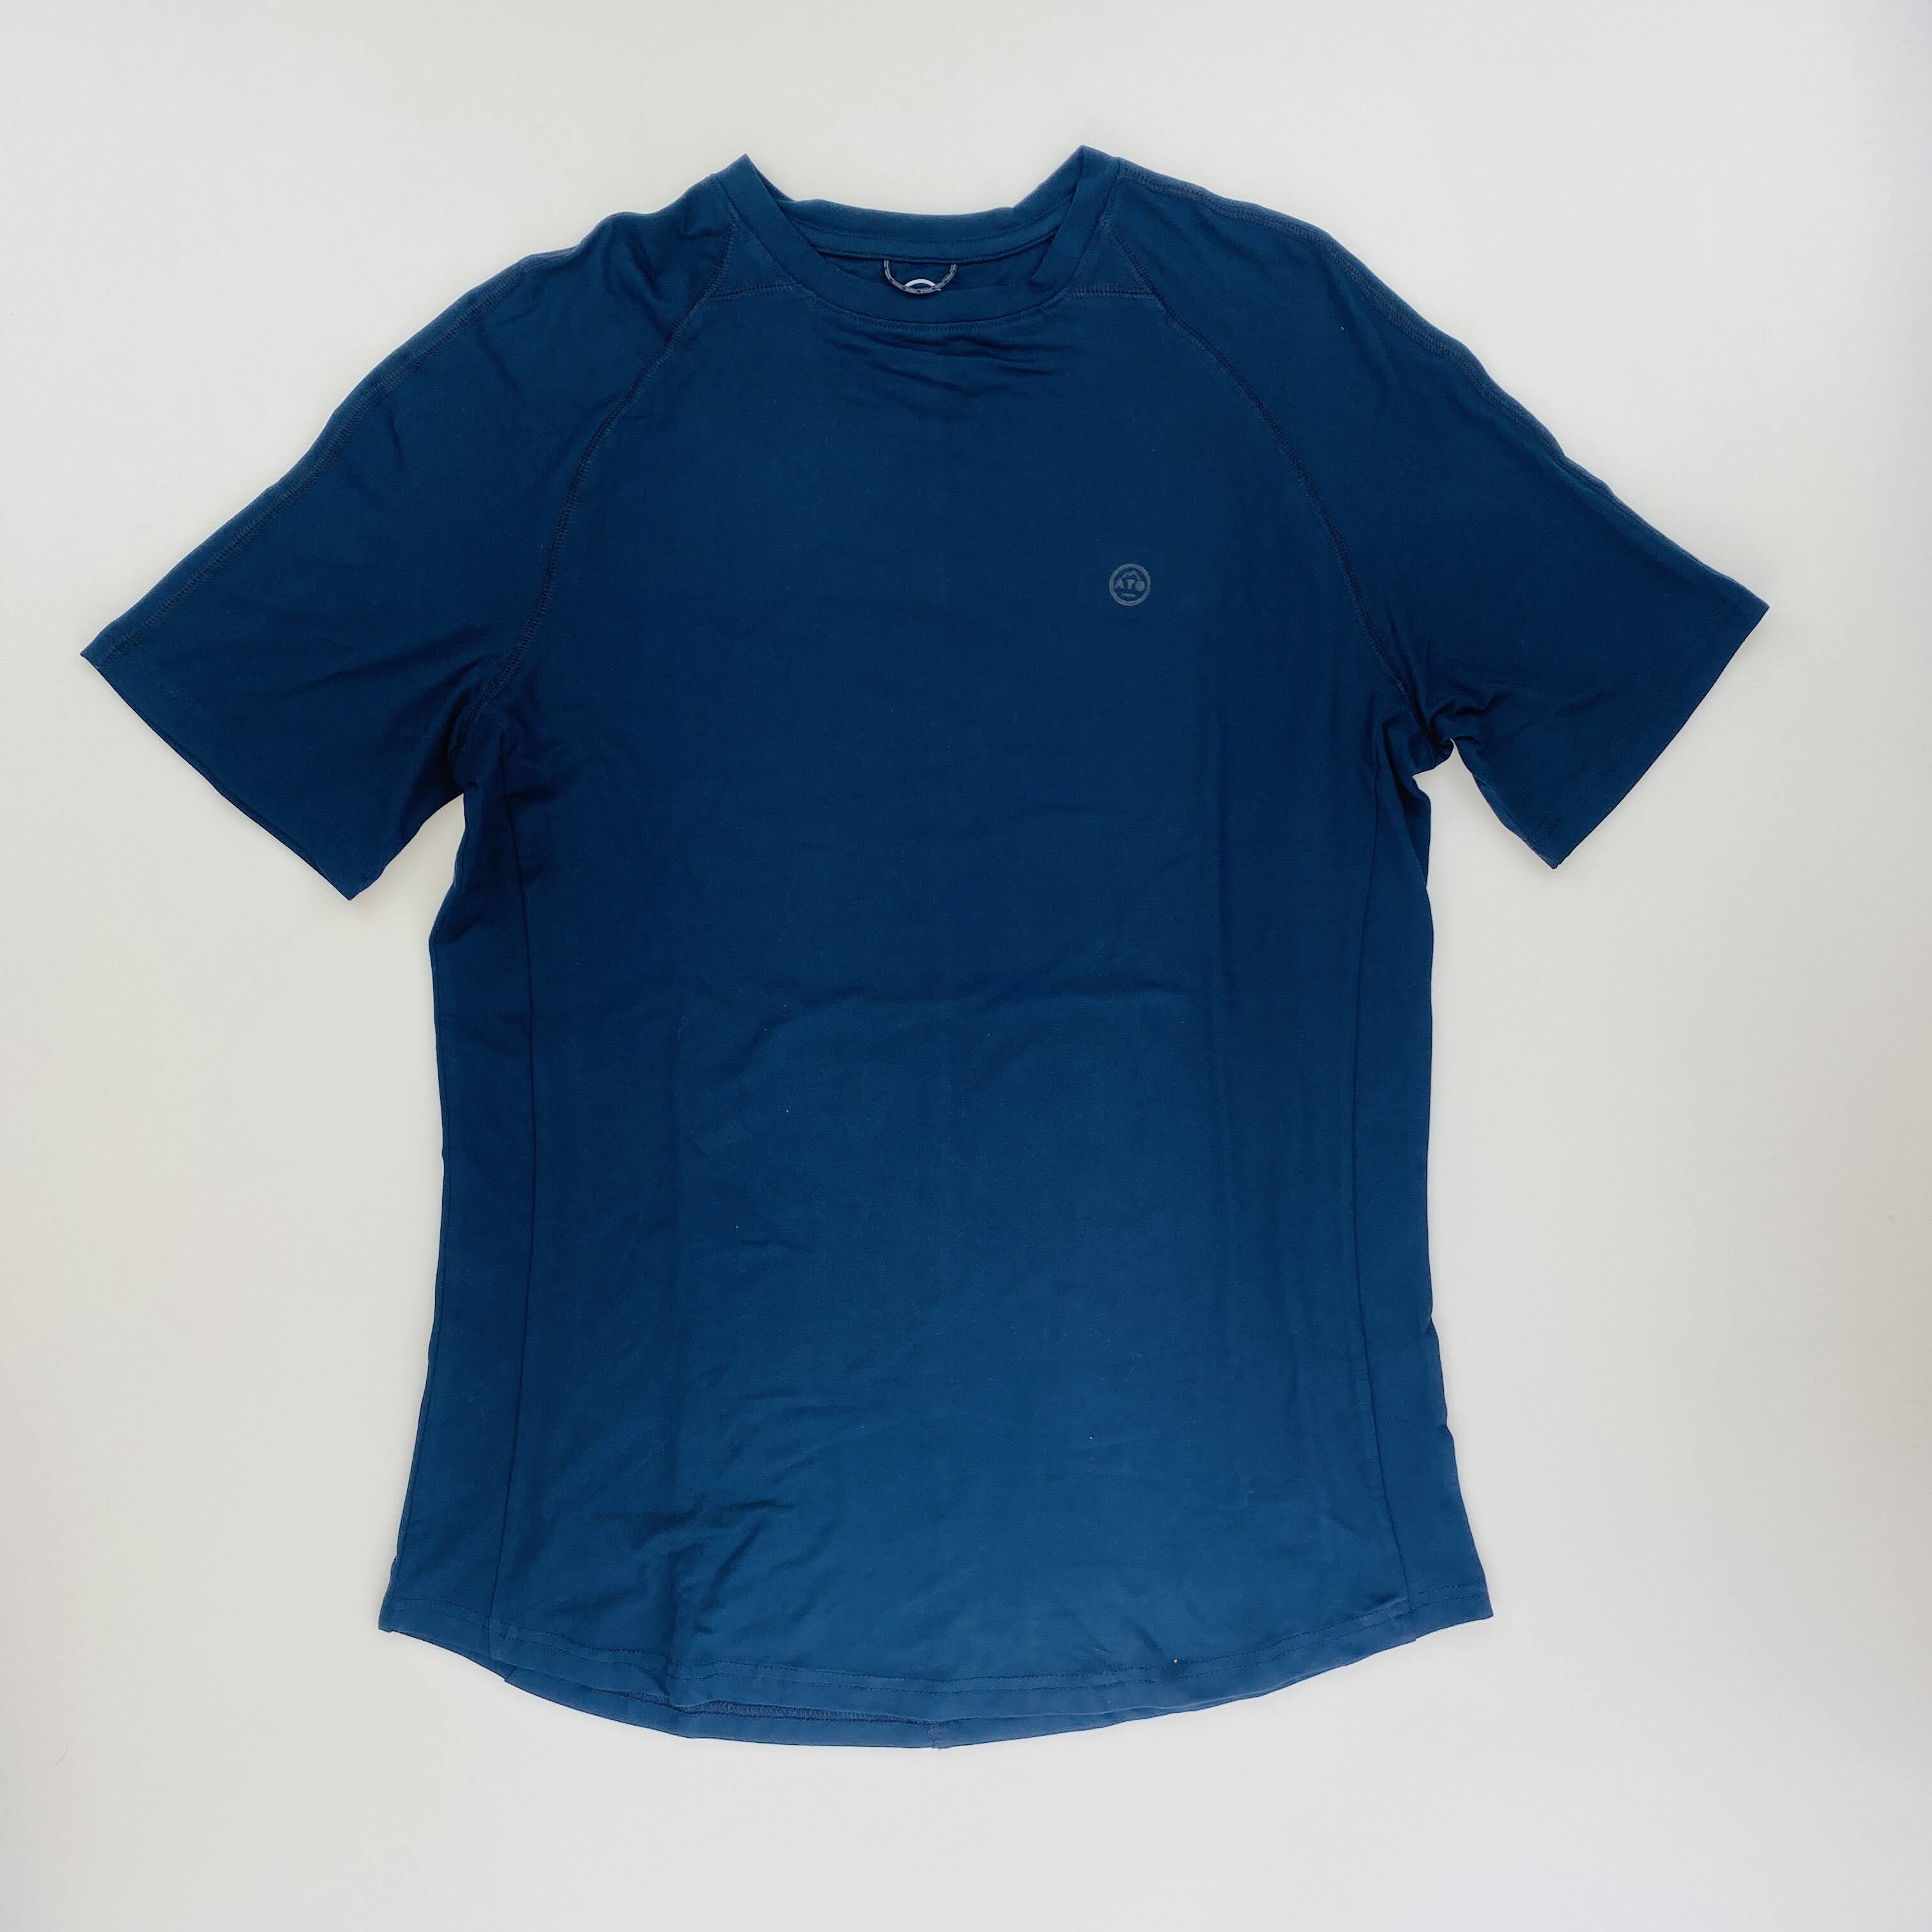 Wrangler Ss Performance T Shirt - Seconde main T-shirt homme - Bleu - M | Hardloop